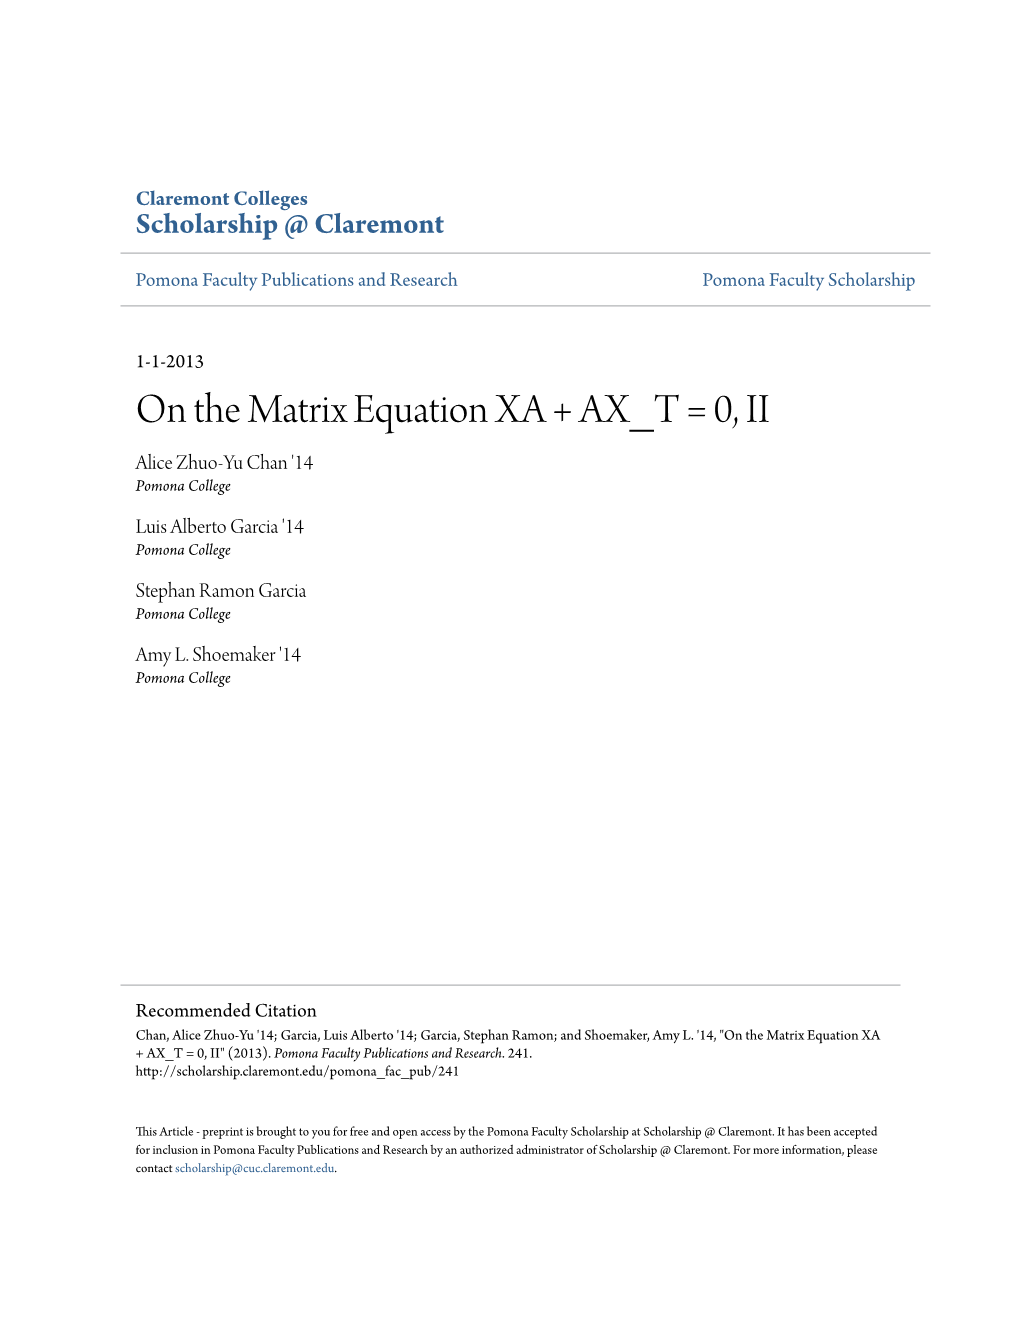 On the Matrix Equation XA + AX T = 0, II Alice Zhuo-Yu Chan '14 Pomona College